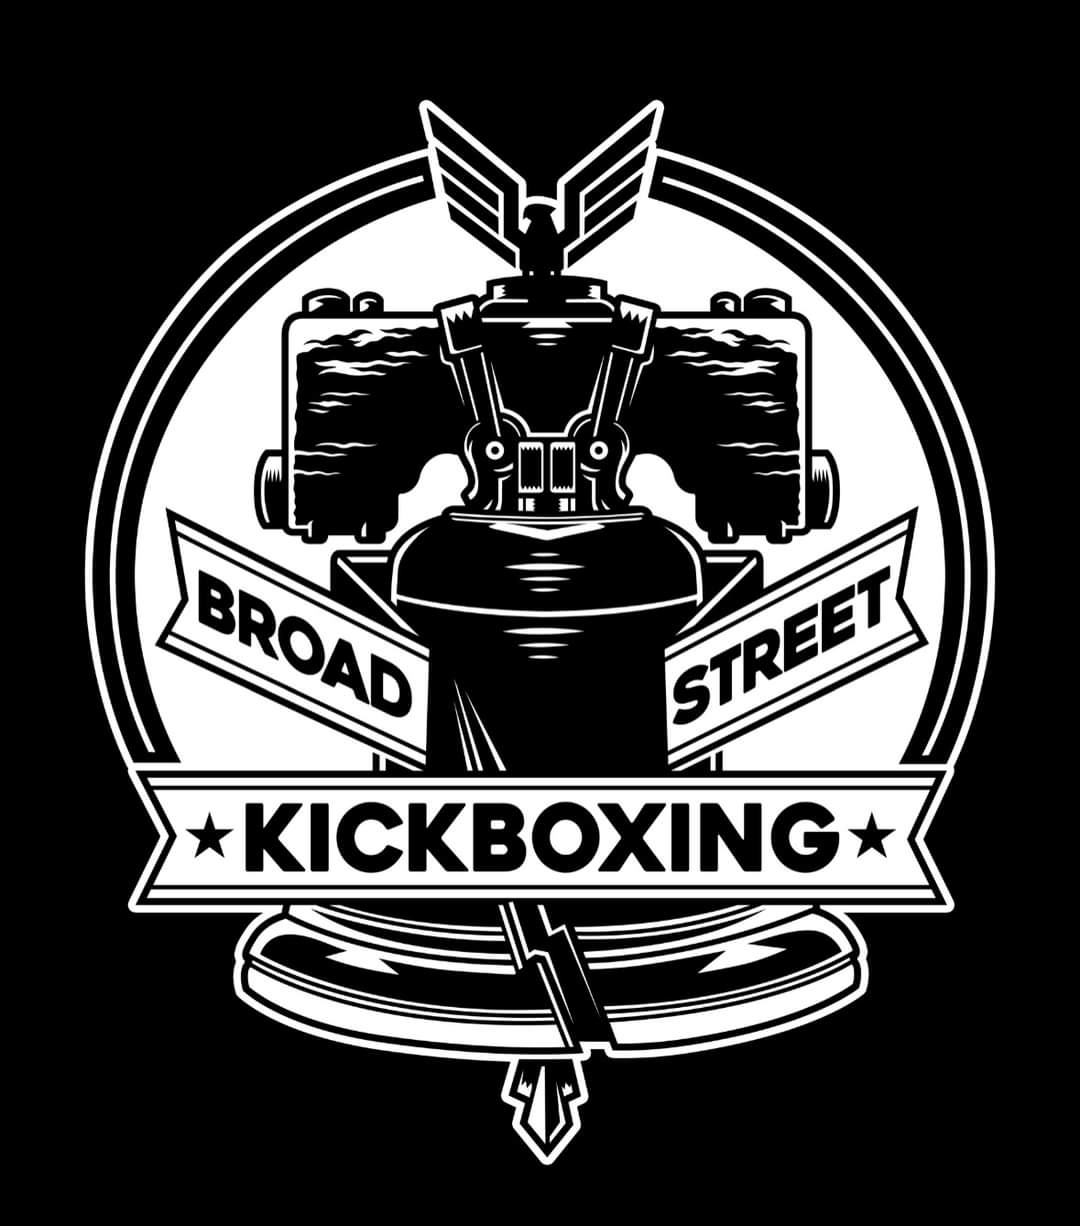 Broadstreet Kickboxing